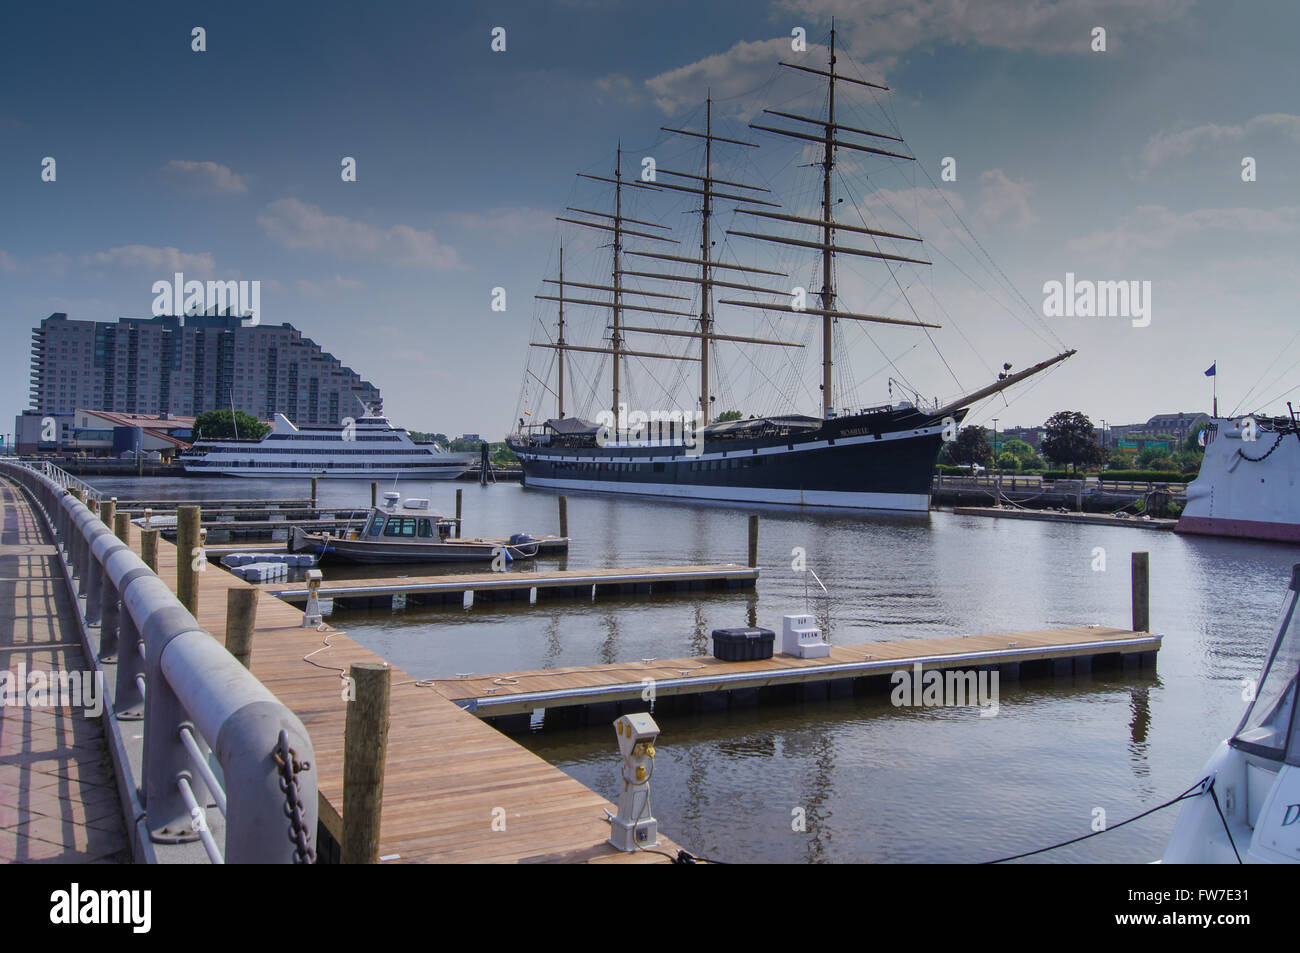 Porto di Philadelphia Foto stock - Alamy